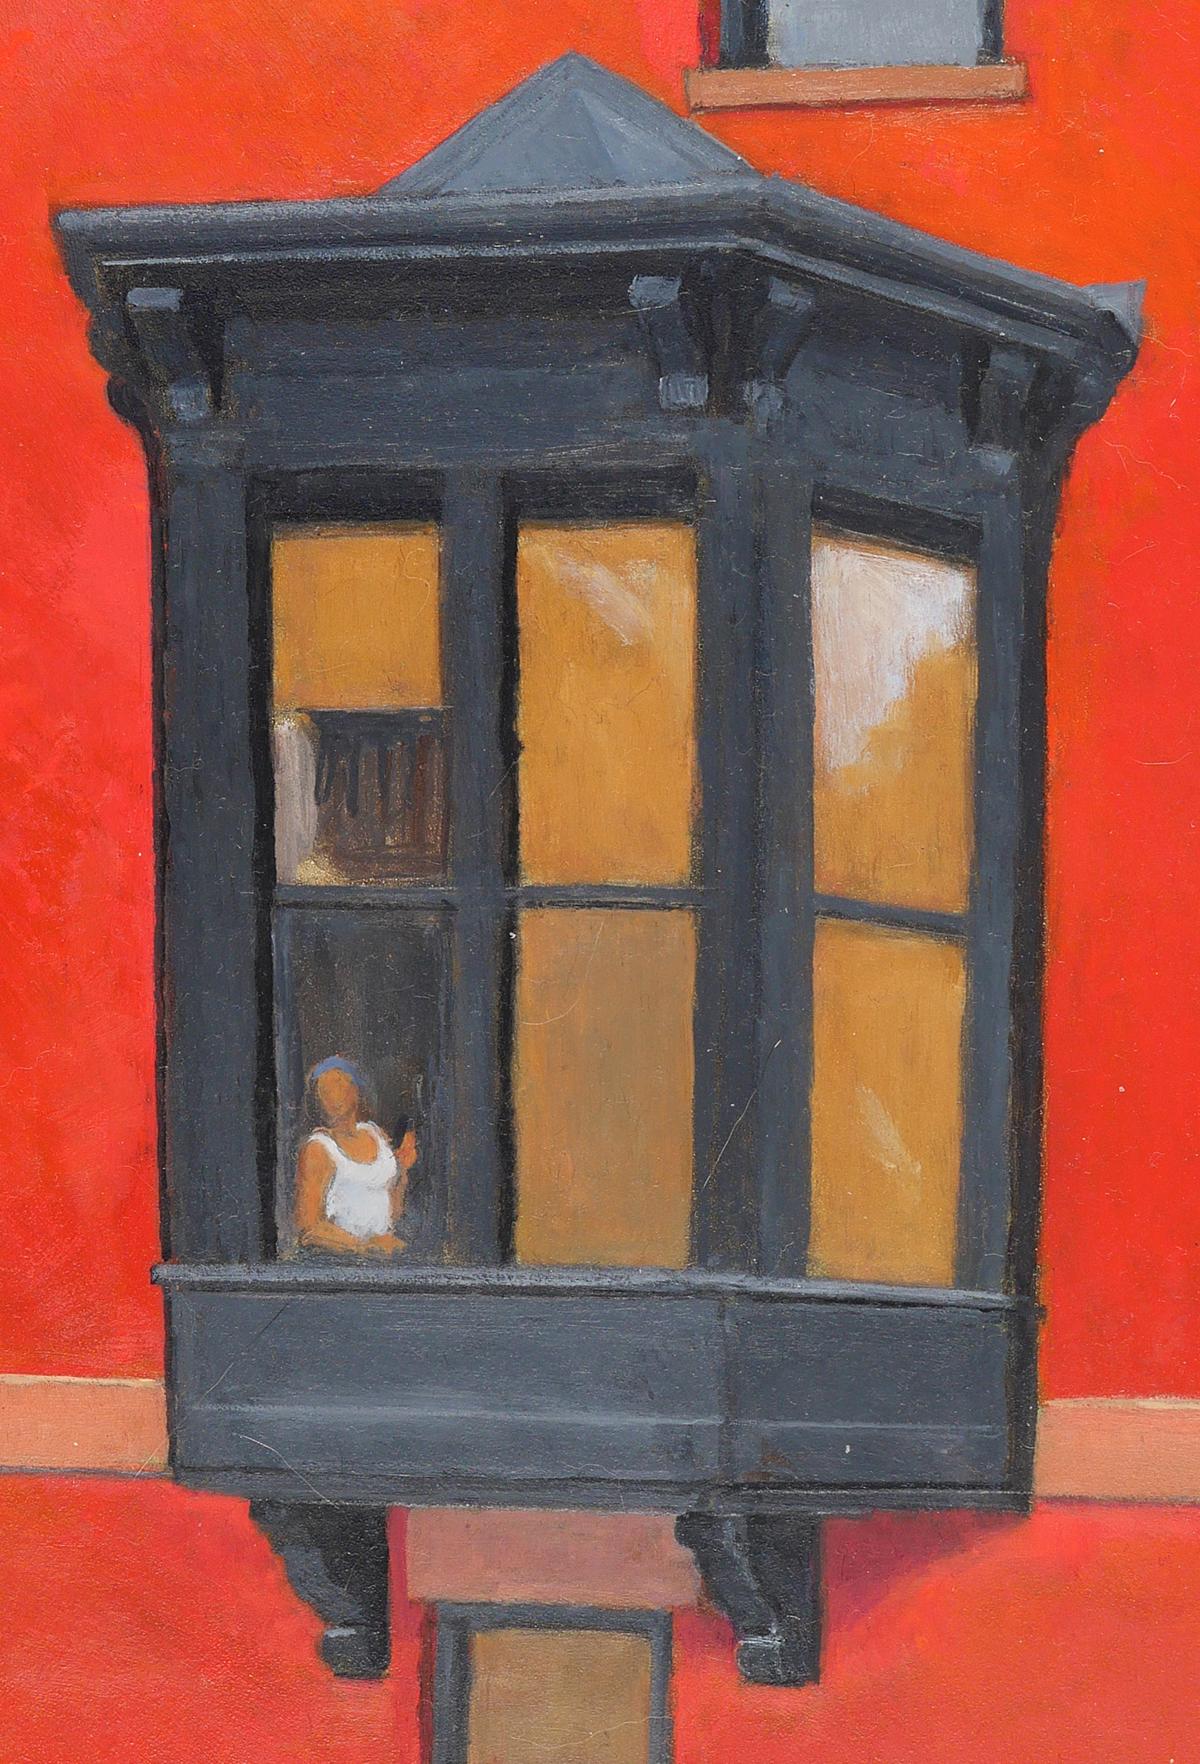 Window Box bay window of red brick Brooklyn building, similar to Edward Hopper  - Painting by Gregory Frux